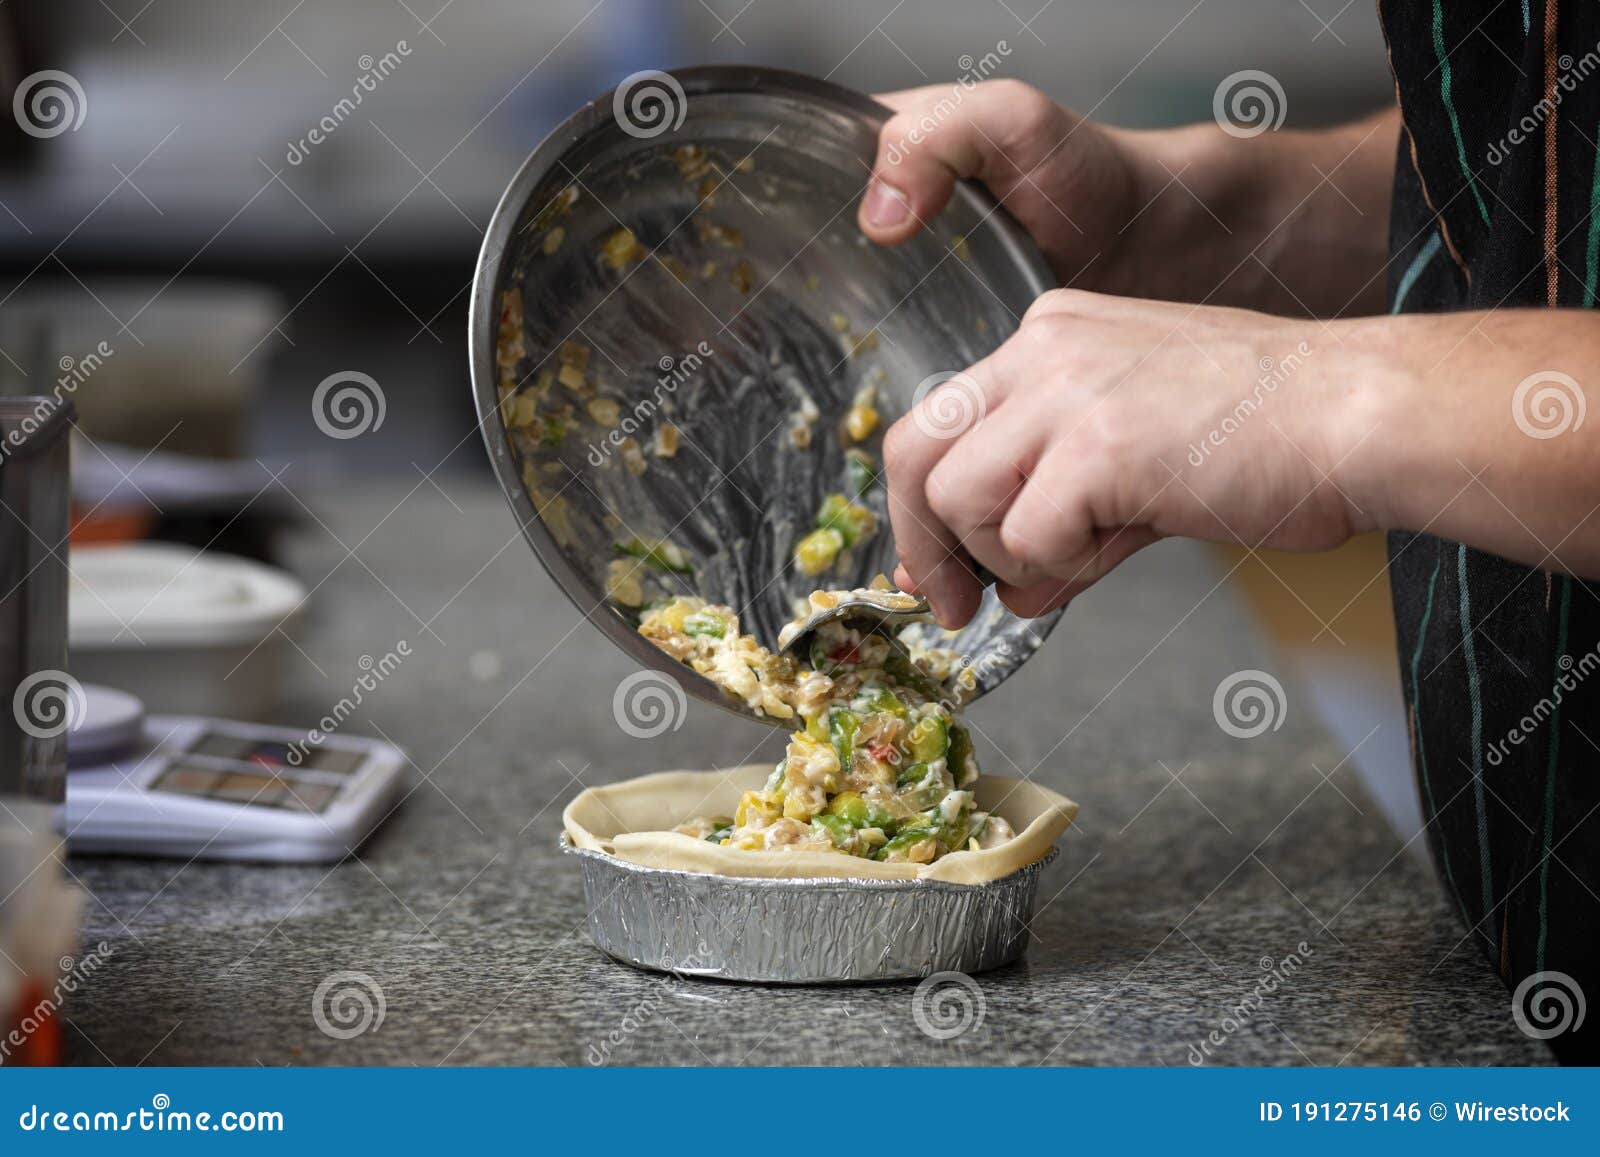 chef filling a vegetable tart